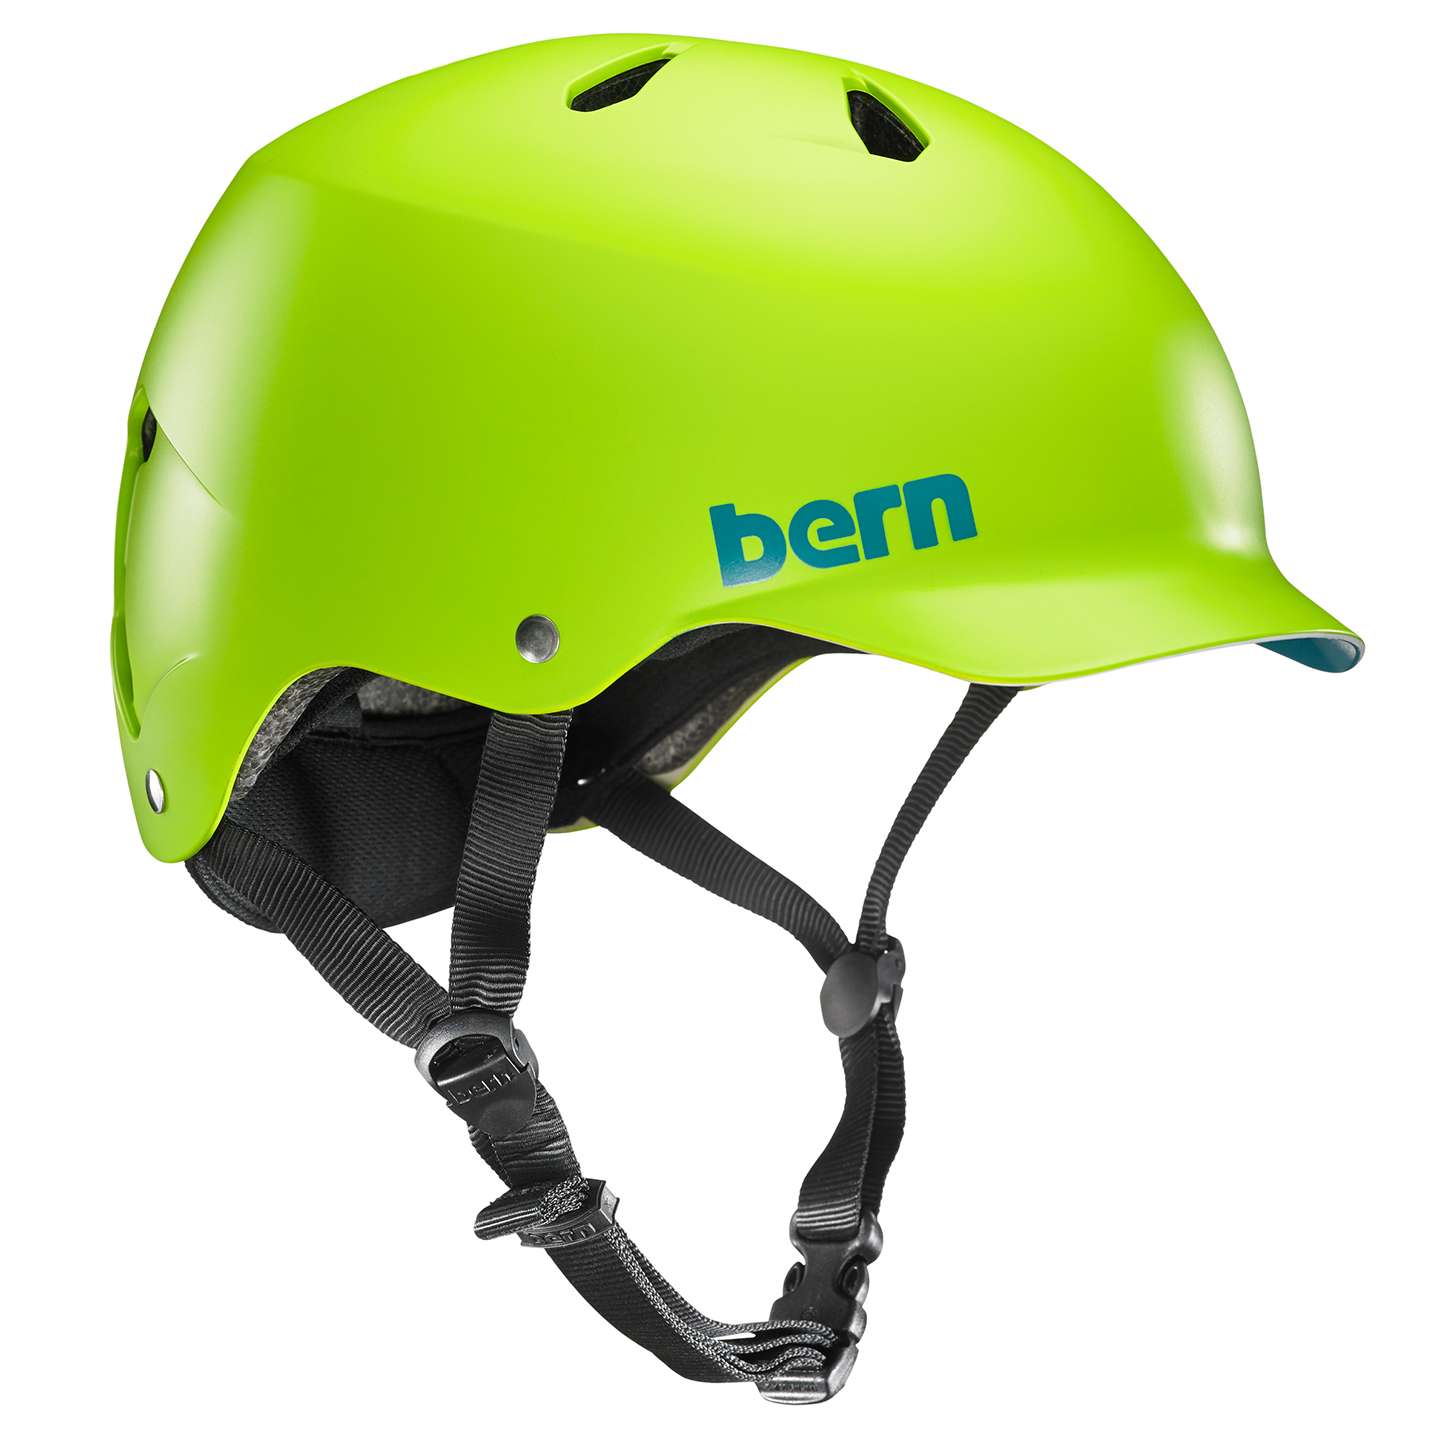 Bern Helmet Size Chart